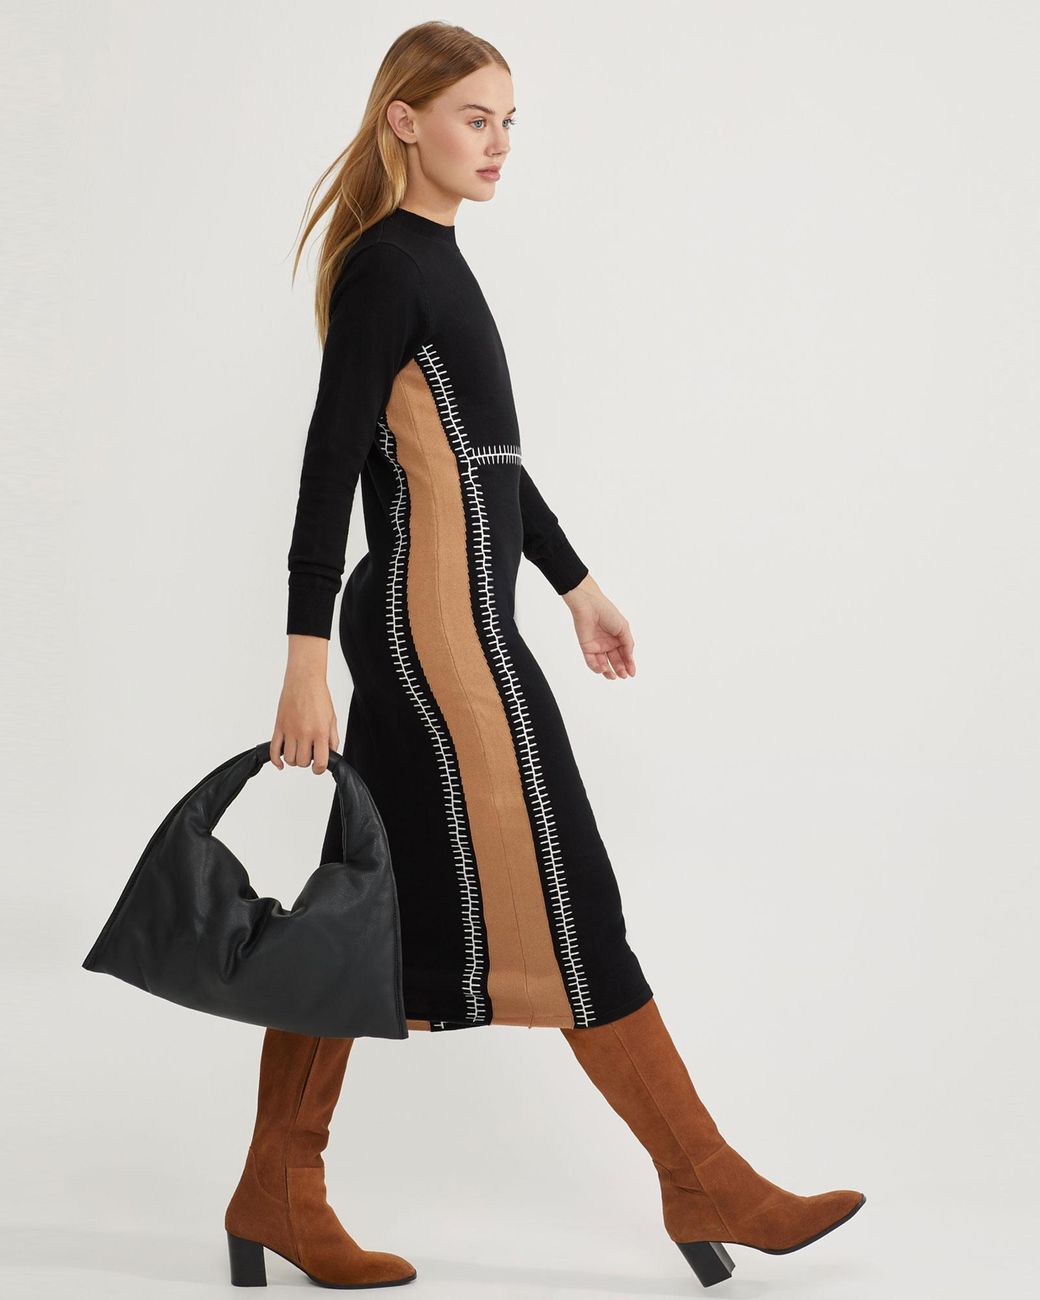 OXFORD Ellen Knit Dress With Contrast Stitch in Black | Lyst Australia